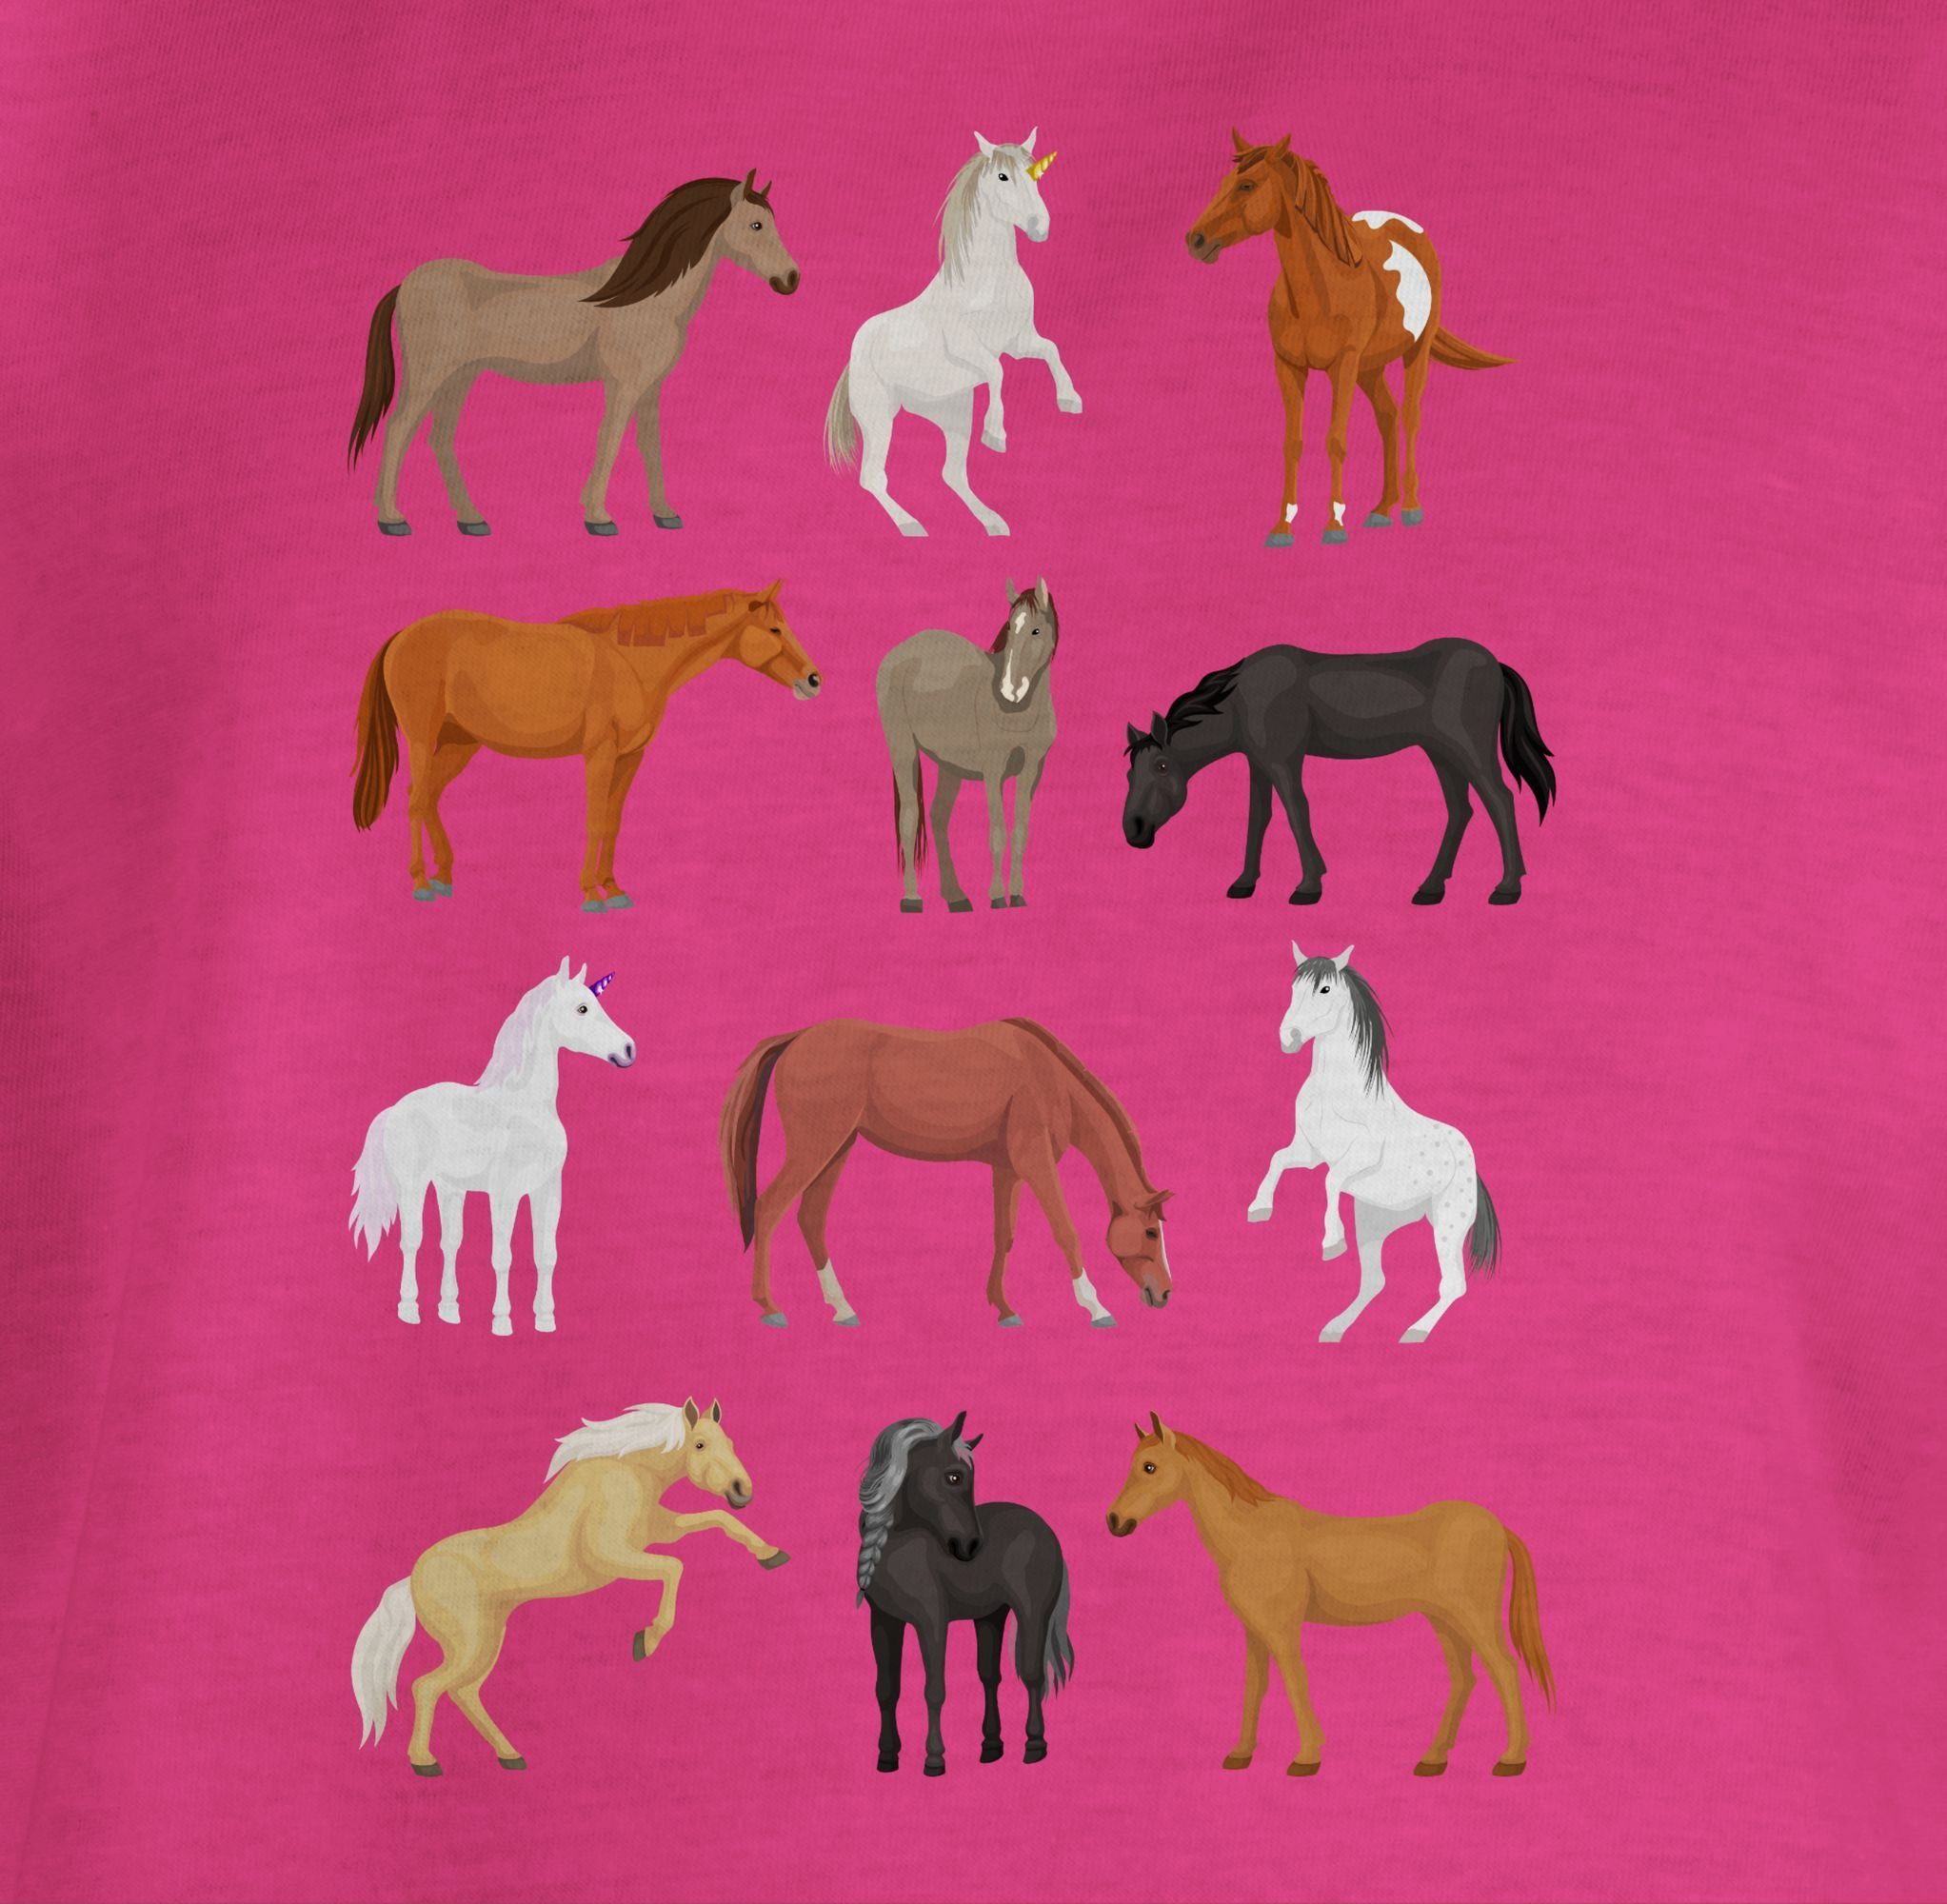 Shirtracer T-Shirt Pferde Fuchsia Print Tiermotiv Animal Reihe 2